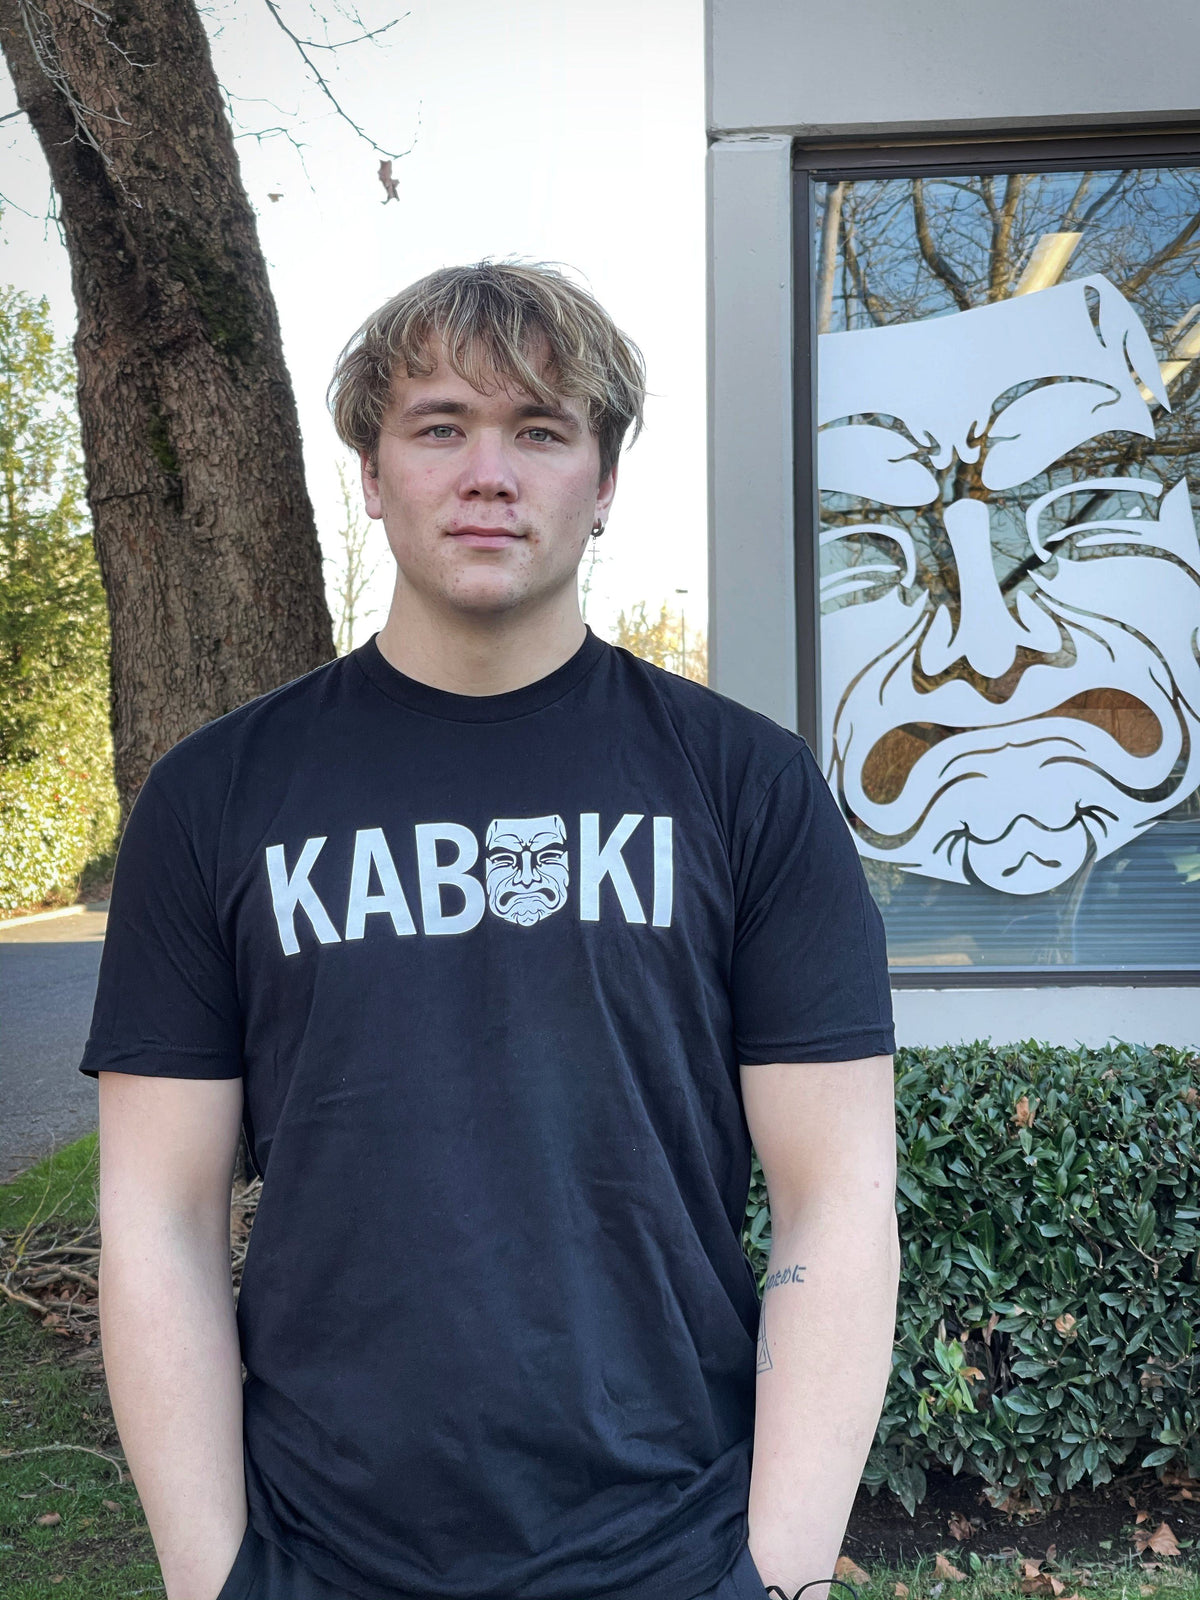 The Kabuki Tee - Kabuki Strength